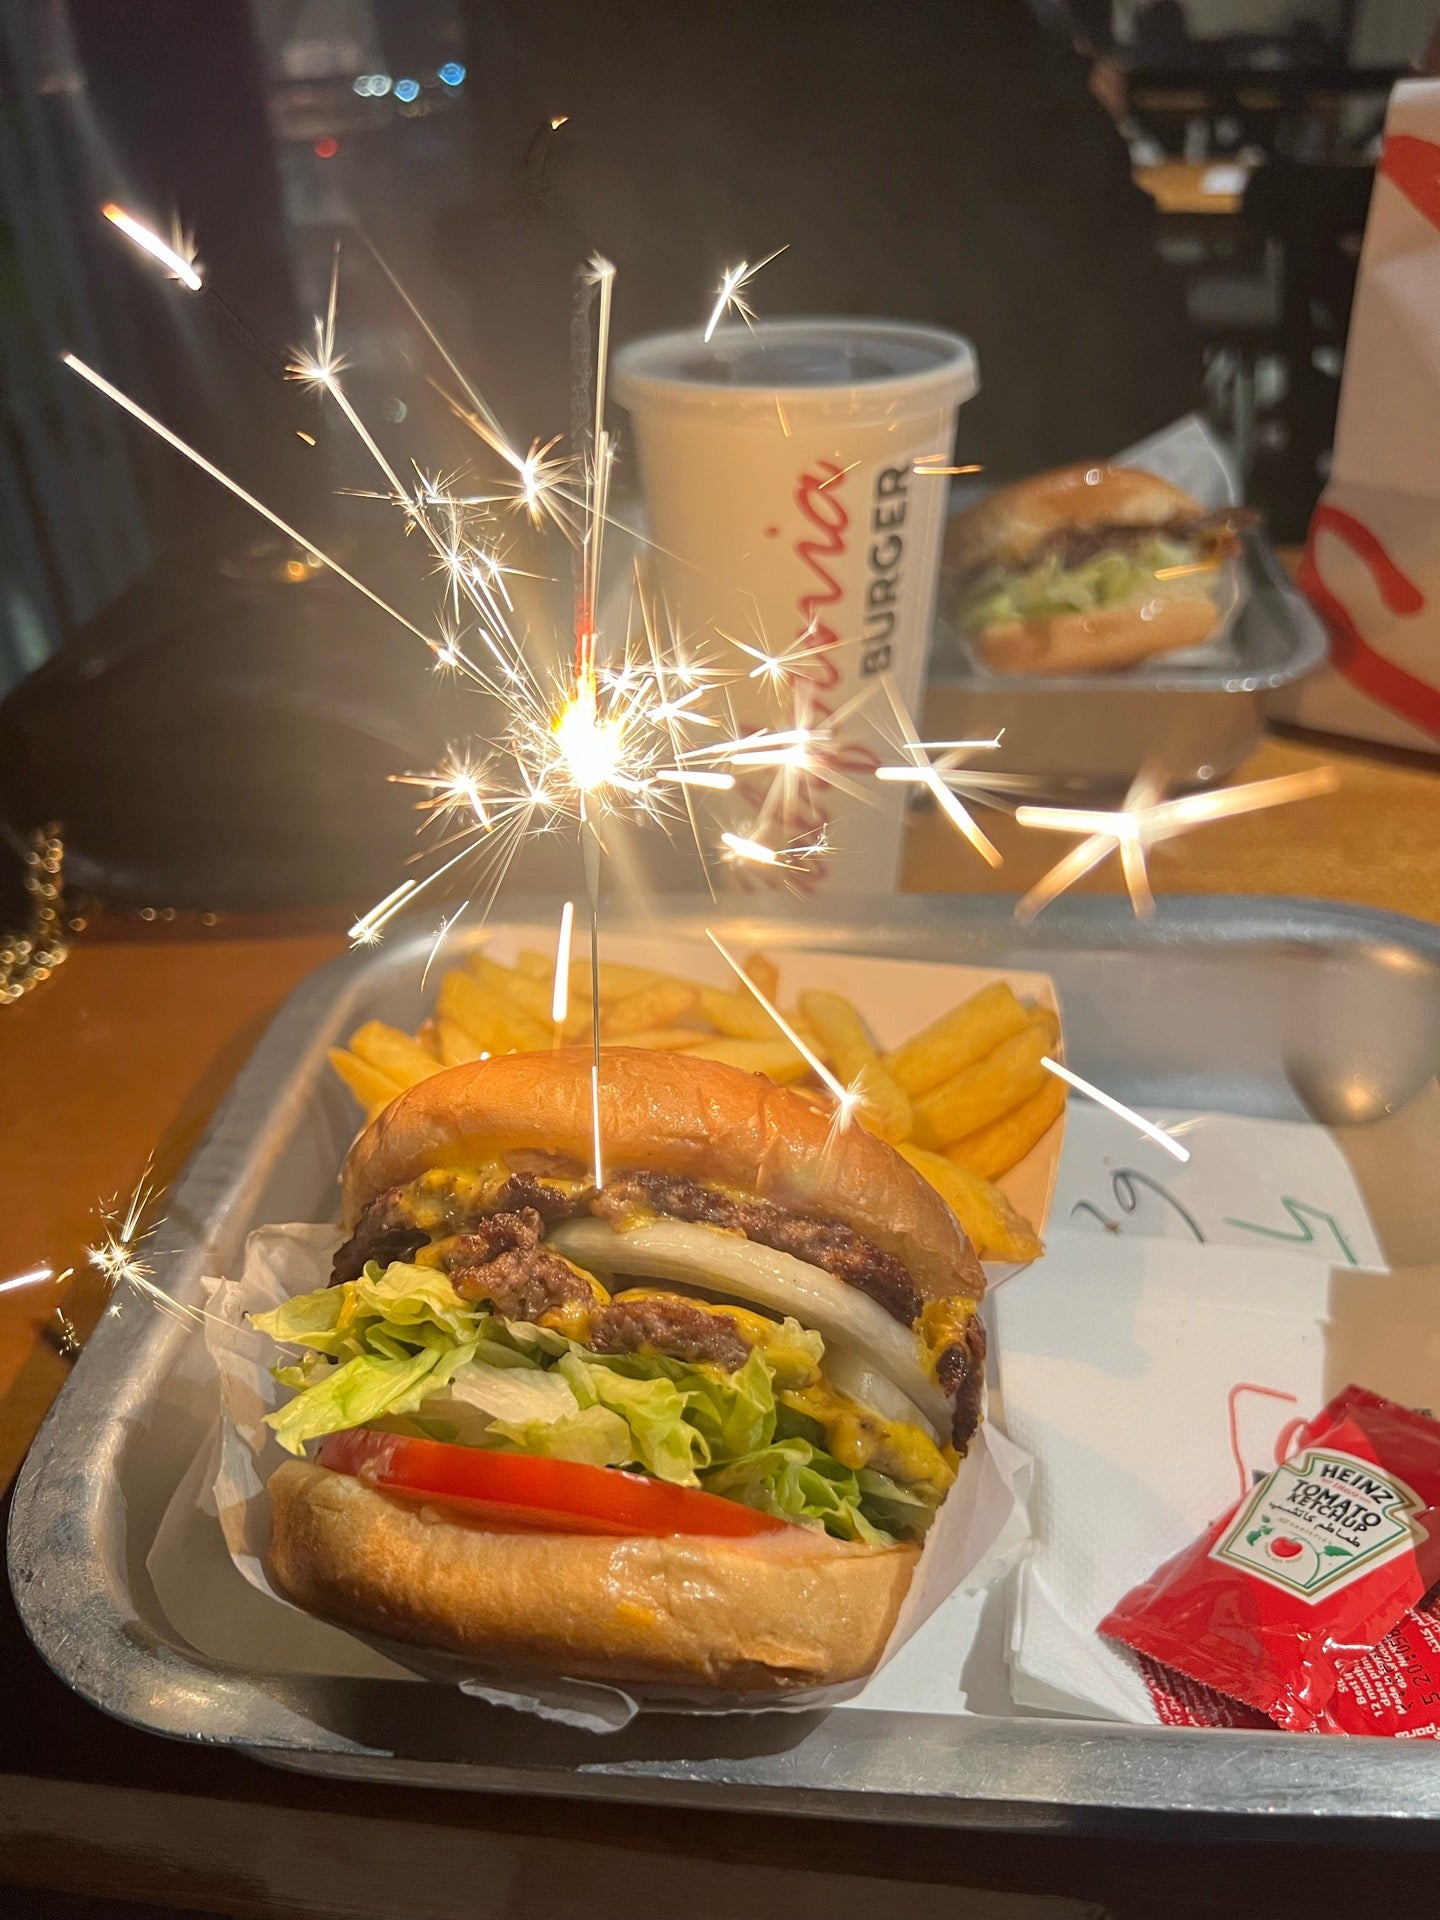 The California Burger (ذي كاليفورنيا برجر)